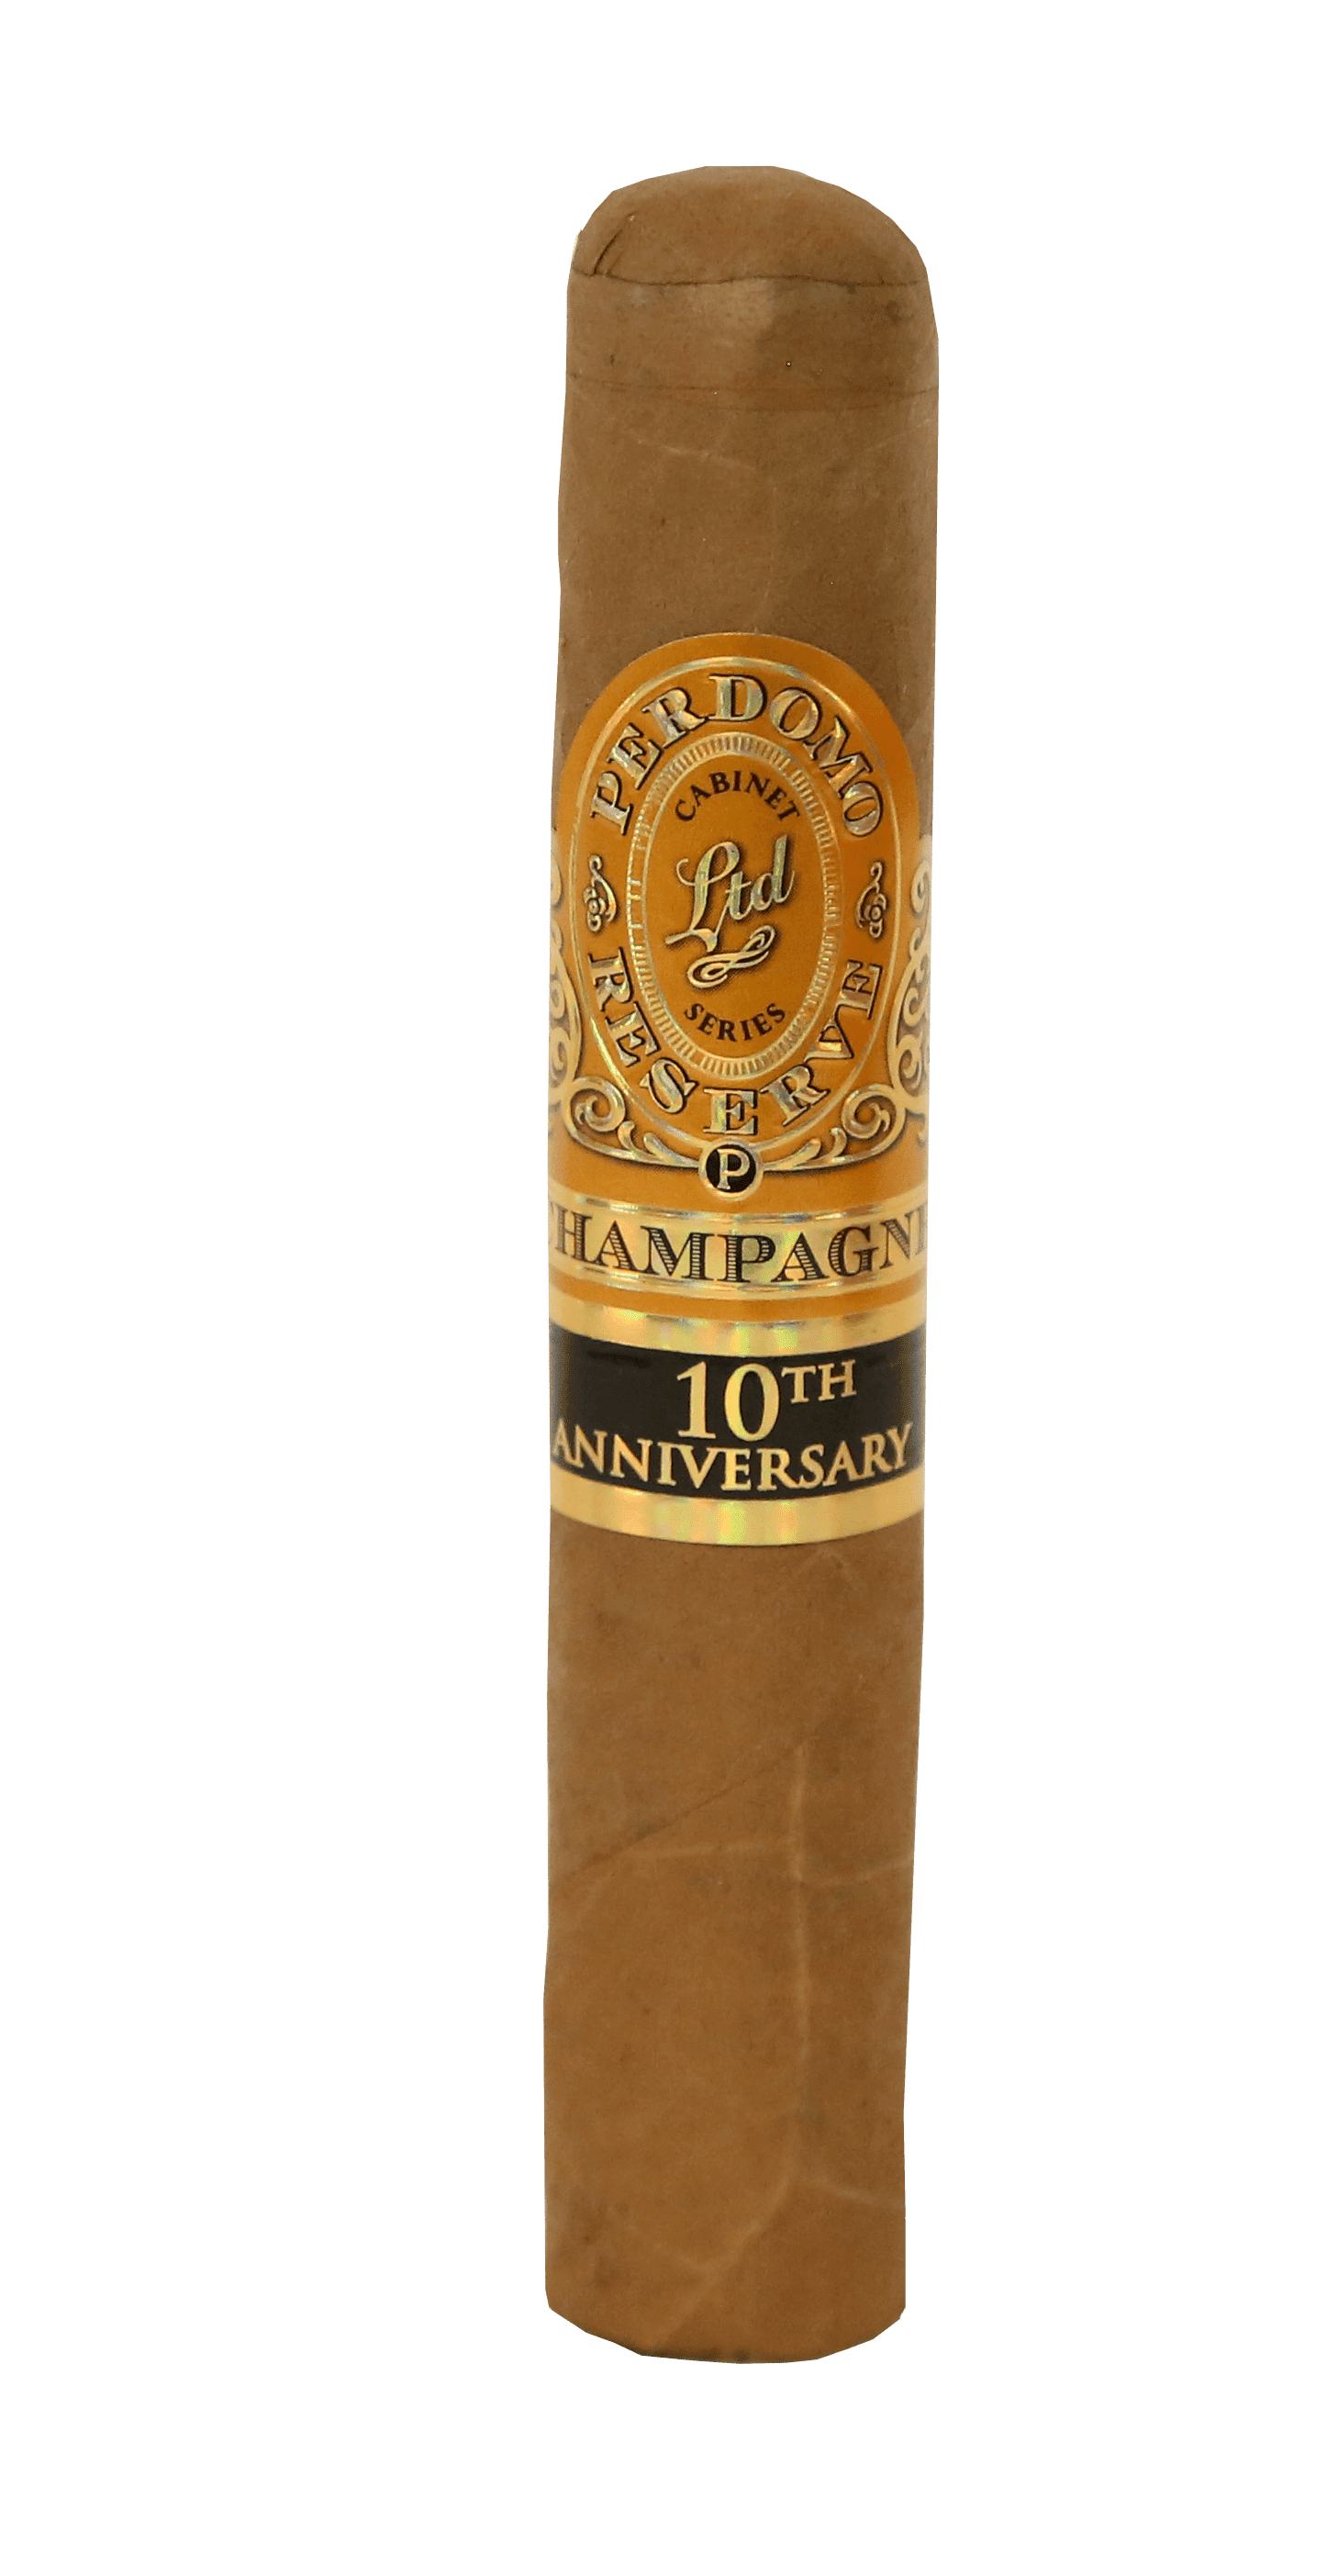 Single Perdomo Reserve 10th Anniversary Champagne Robusto cigar